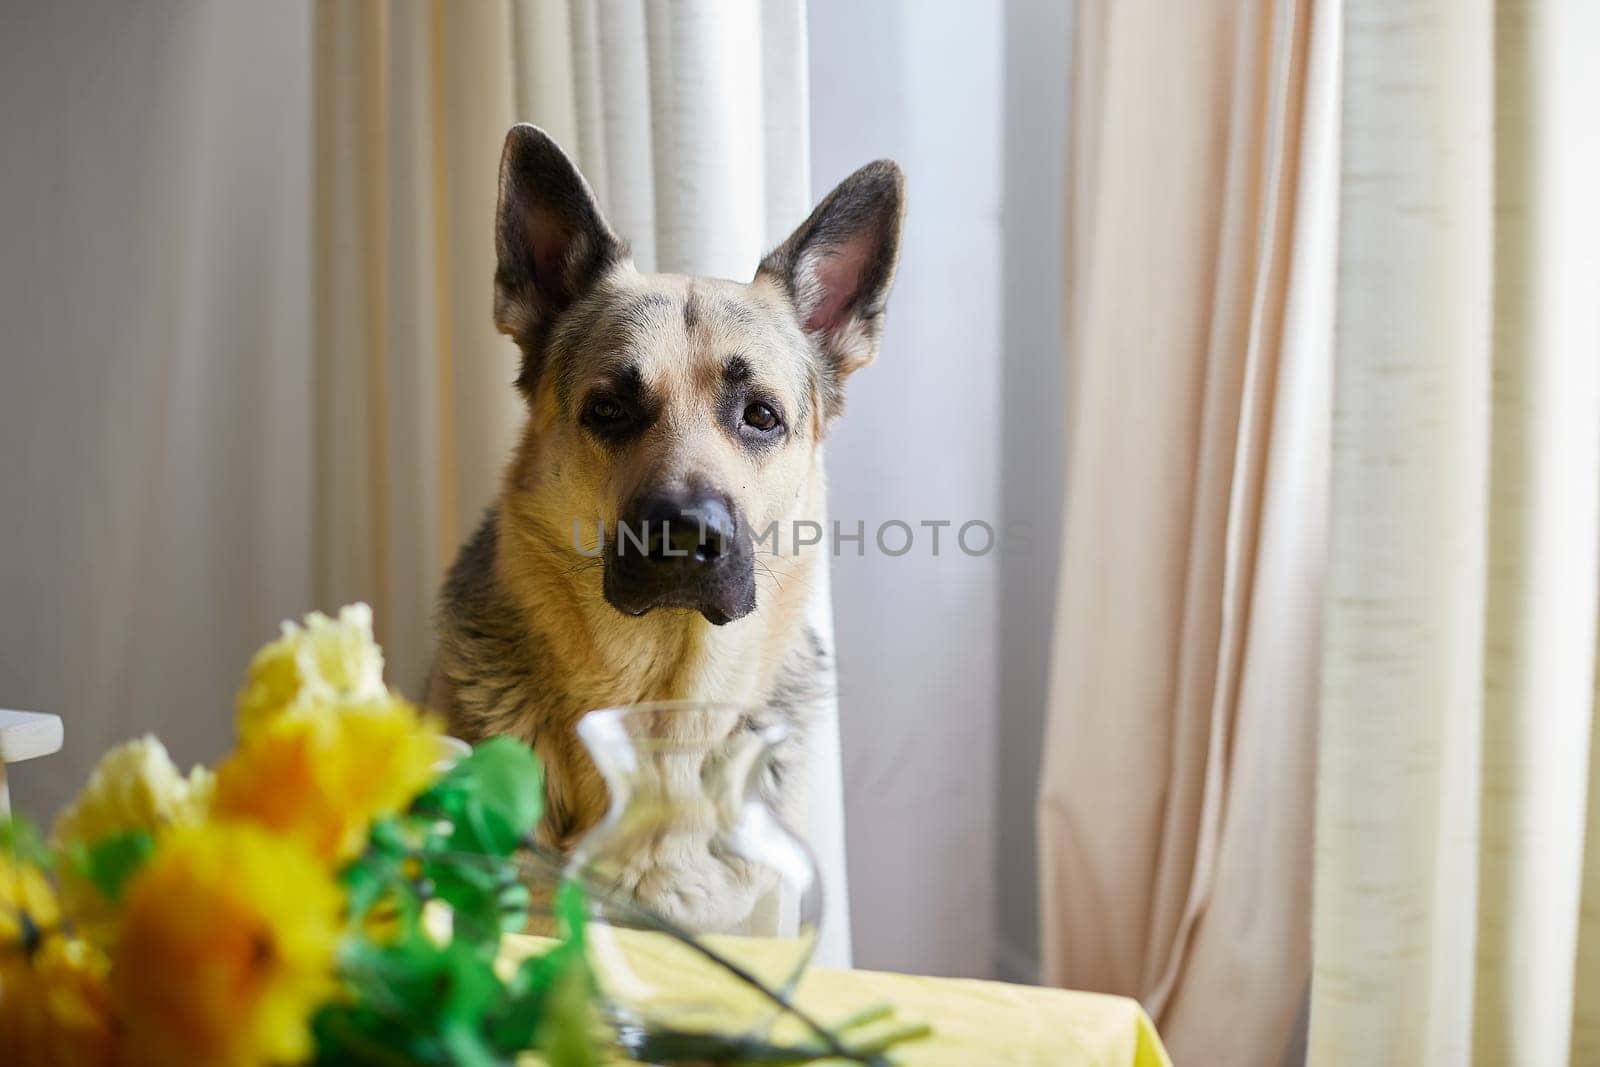 Dog German Shepherd inside of room with yellow flowers. Russian eastern European dog veo indoors